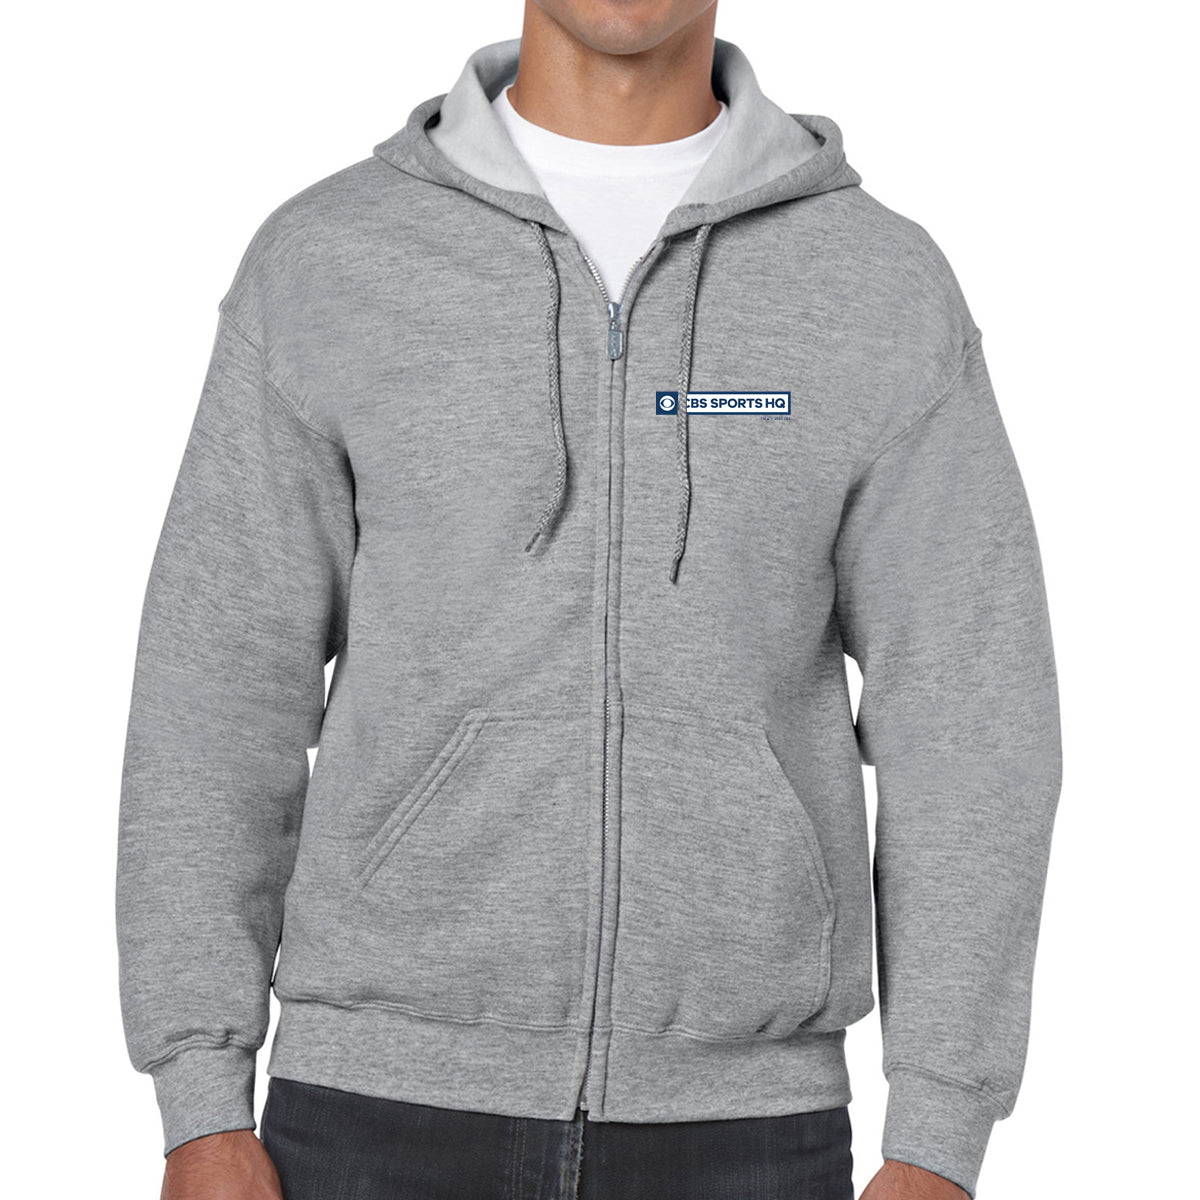 CBS Sports CBS Sports HQ Fleece Zip-Up Hooded Sweatshirt